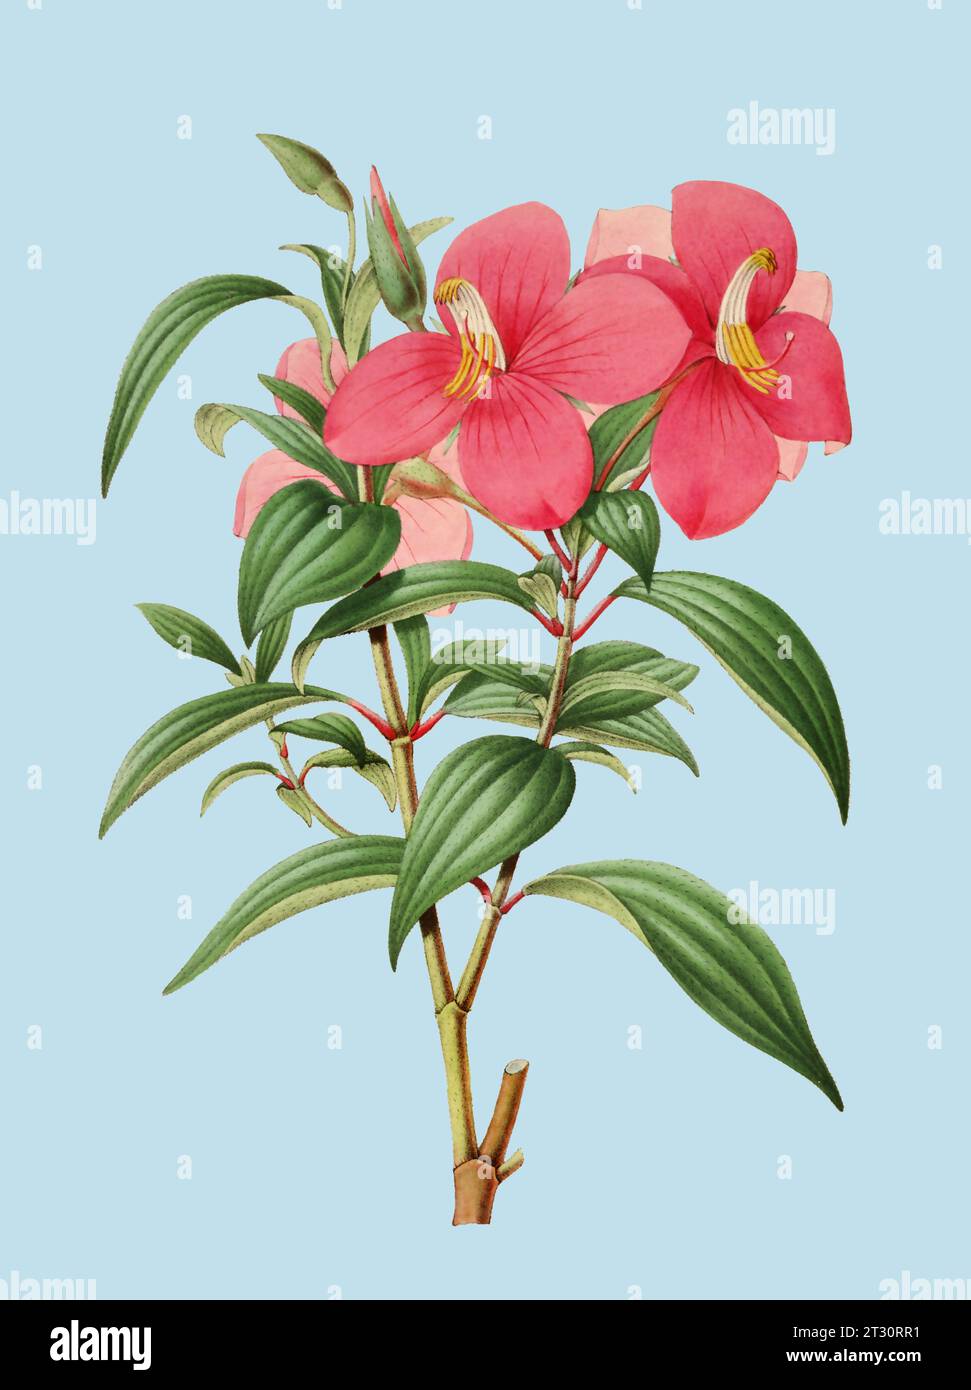 Colorful Flower Illustration: A digital vintage-style flower on a plain light blue background. Stock Photo